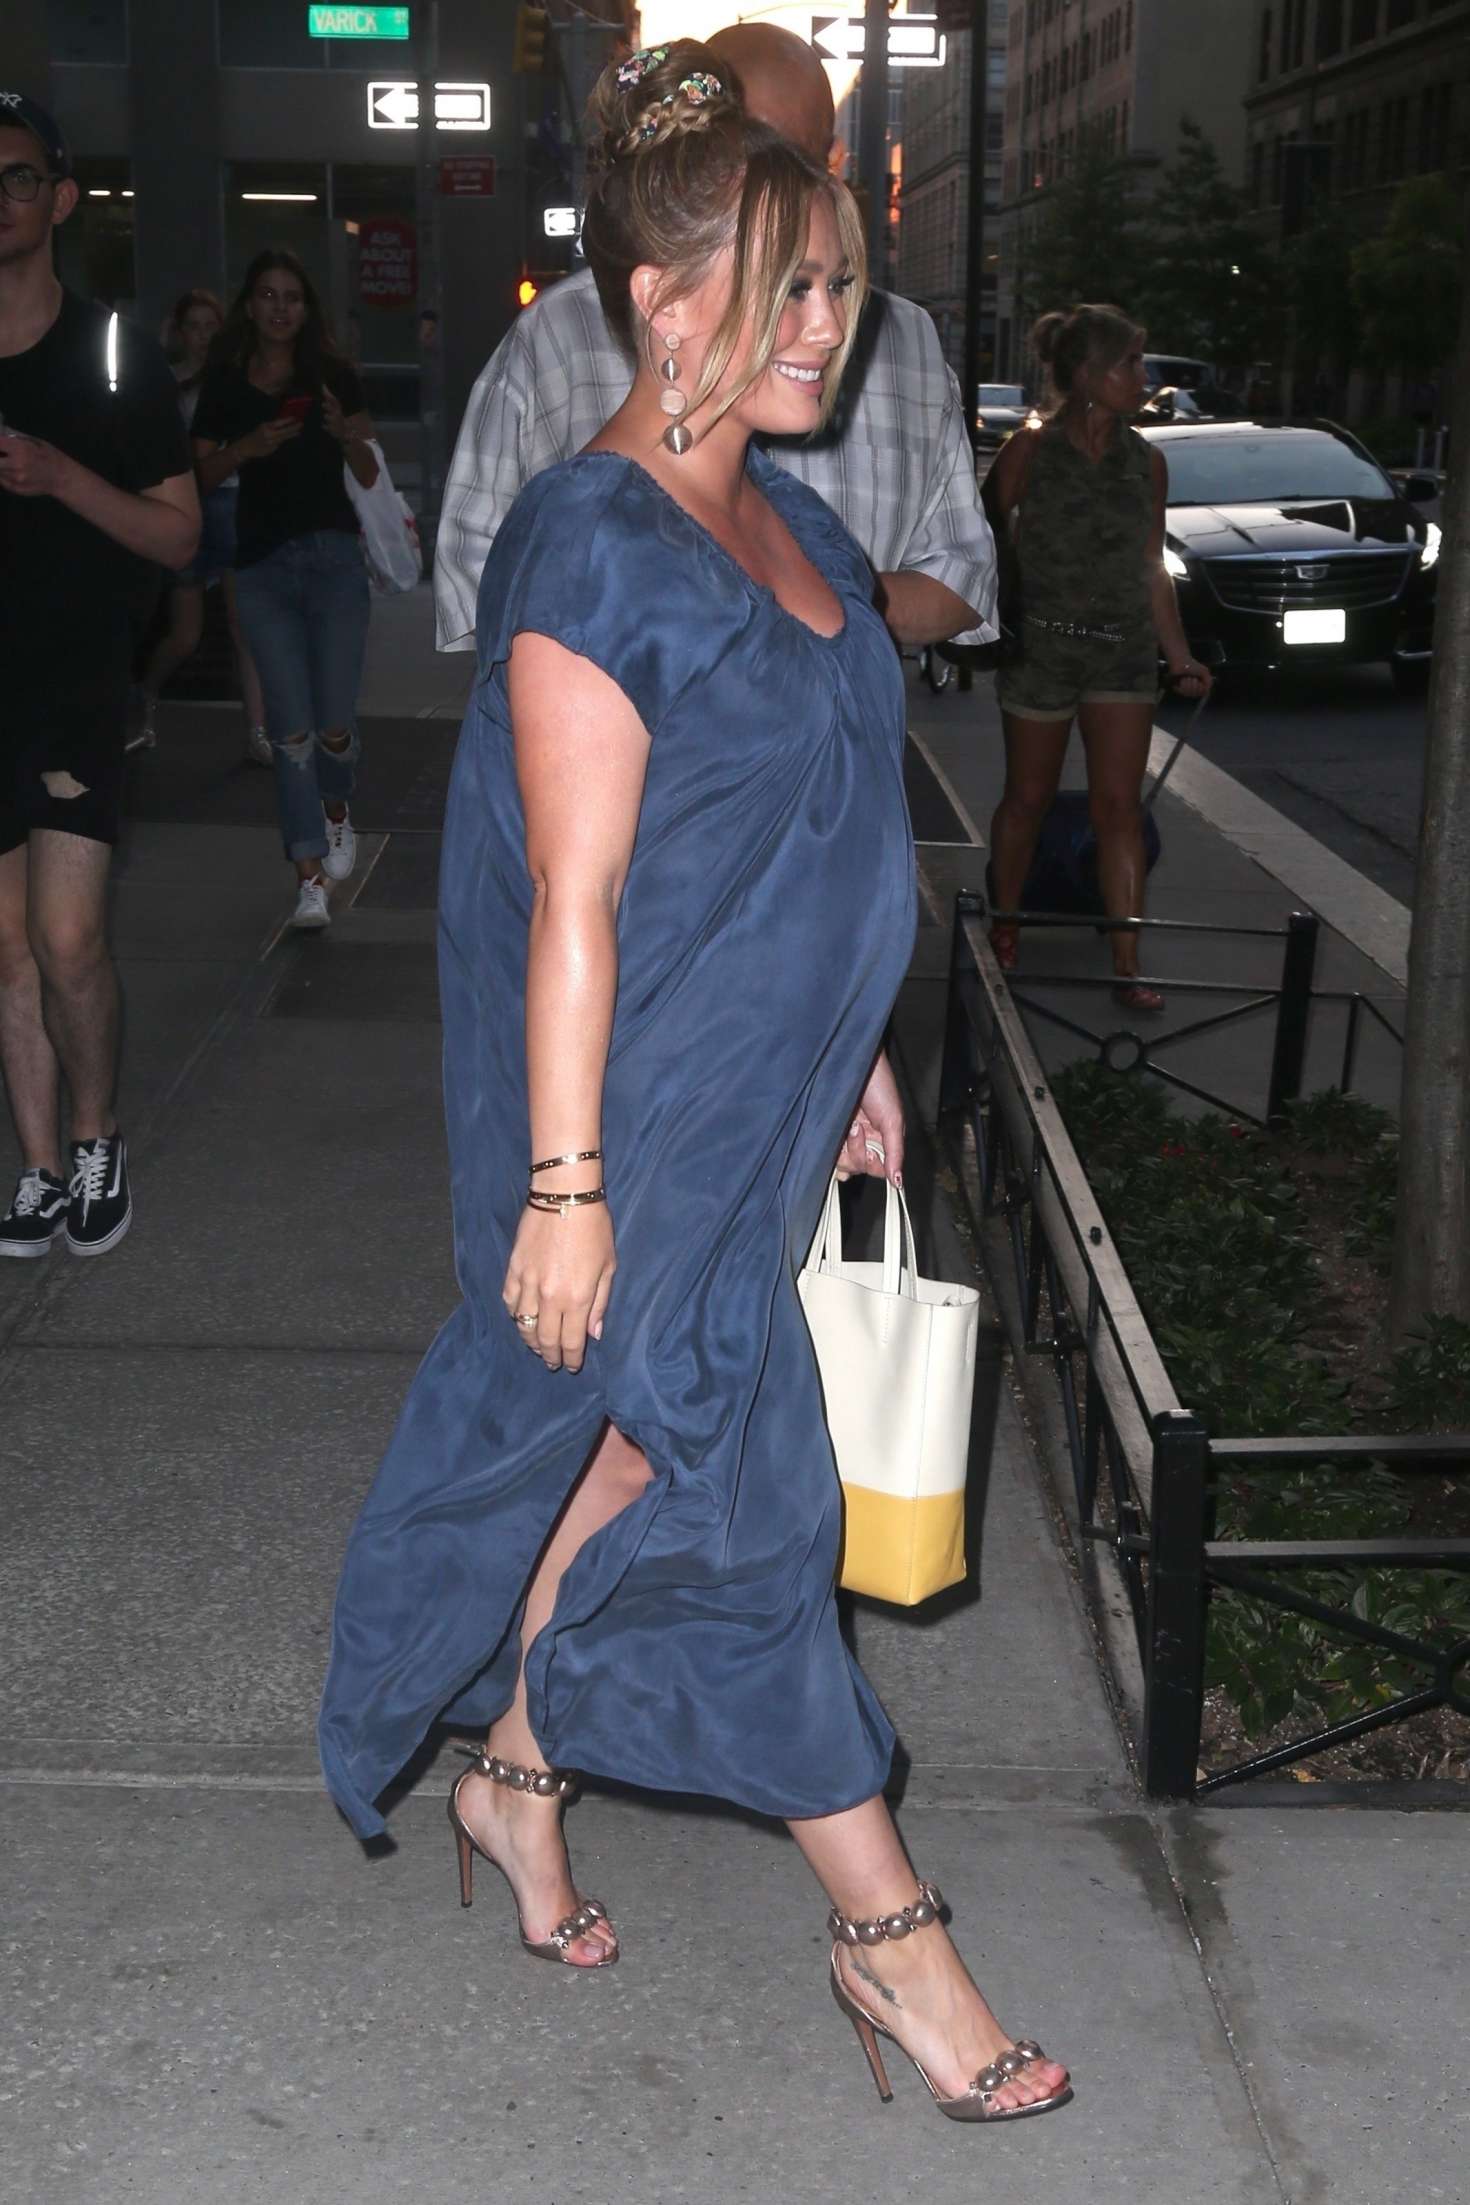 Hilary Duff â€“ Wearing a blue dress in New York